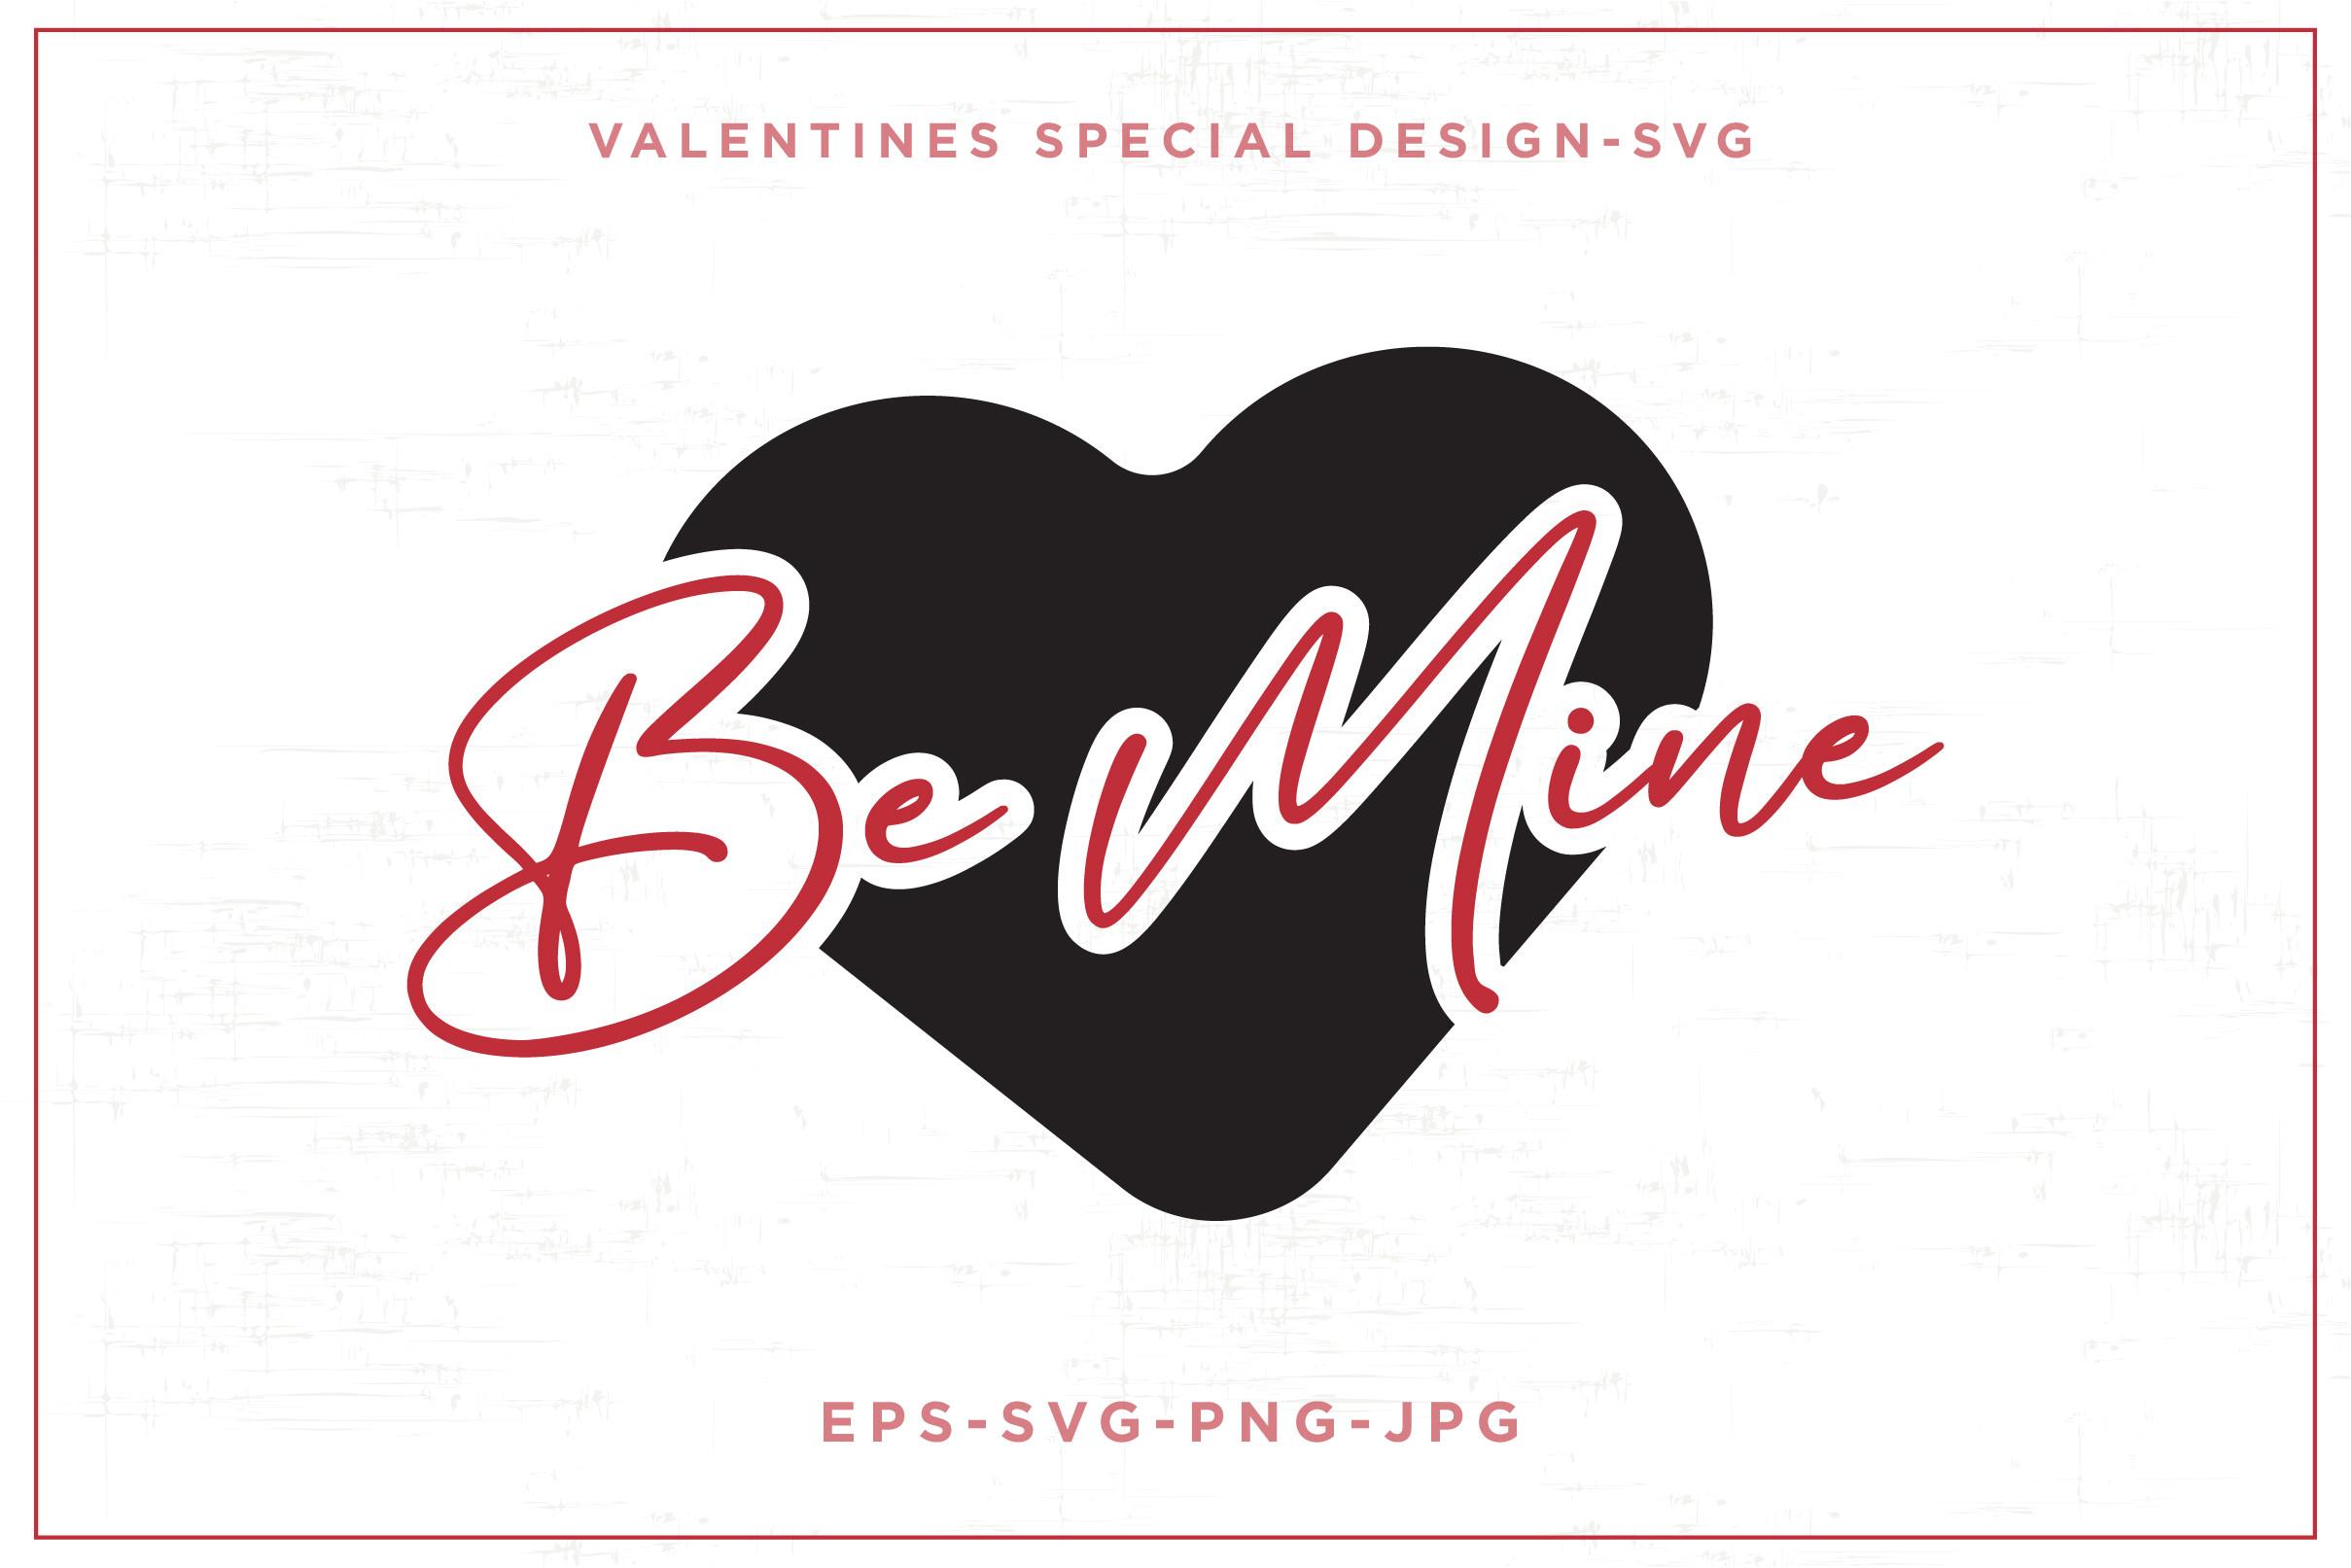 Be Mine-Valentines Design-SVG